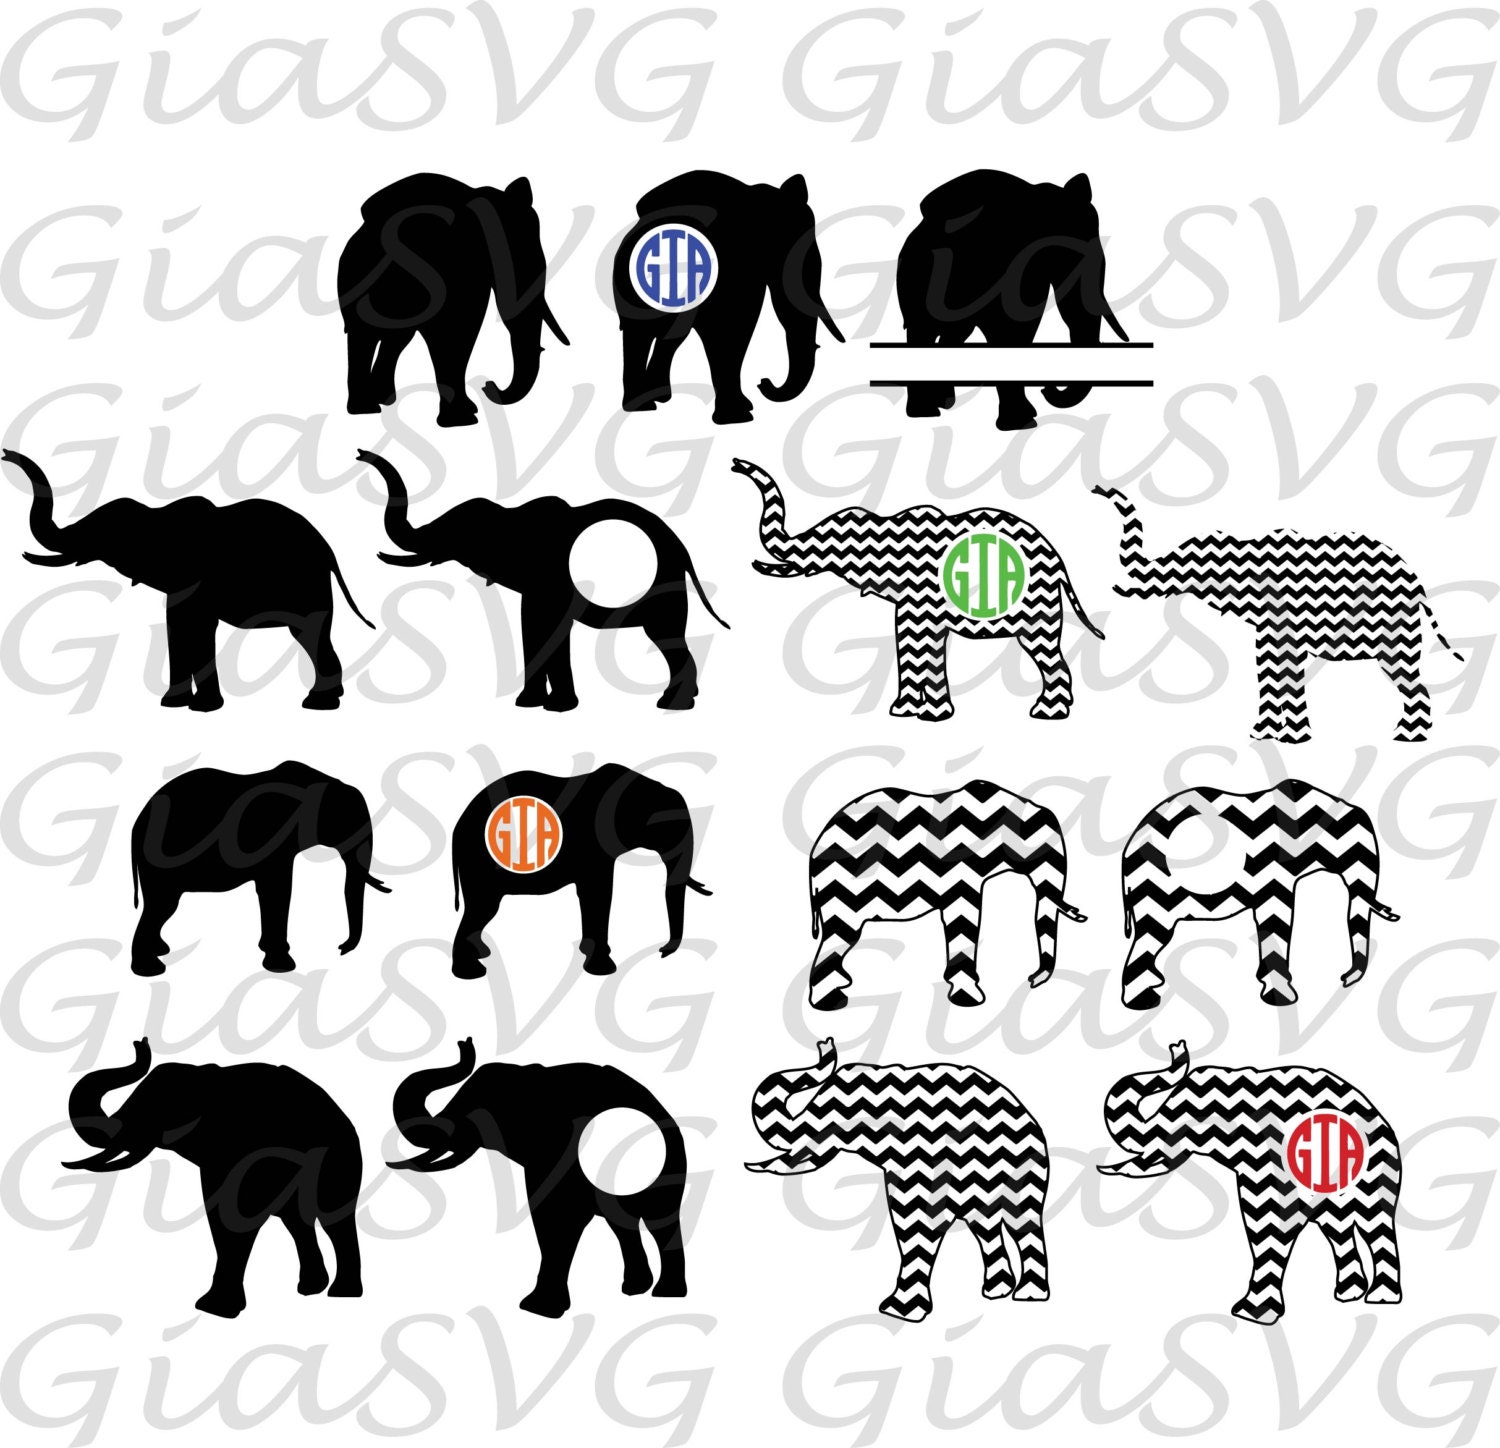 Elephant Monogram SVG elephant clipart chevron elephant svg